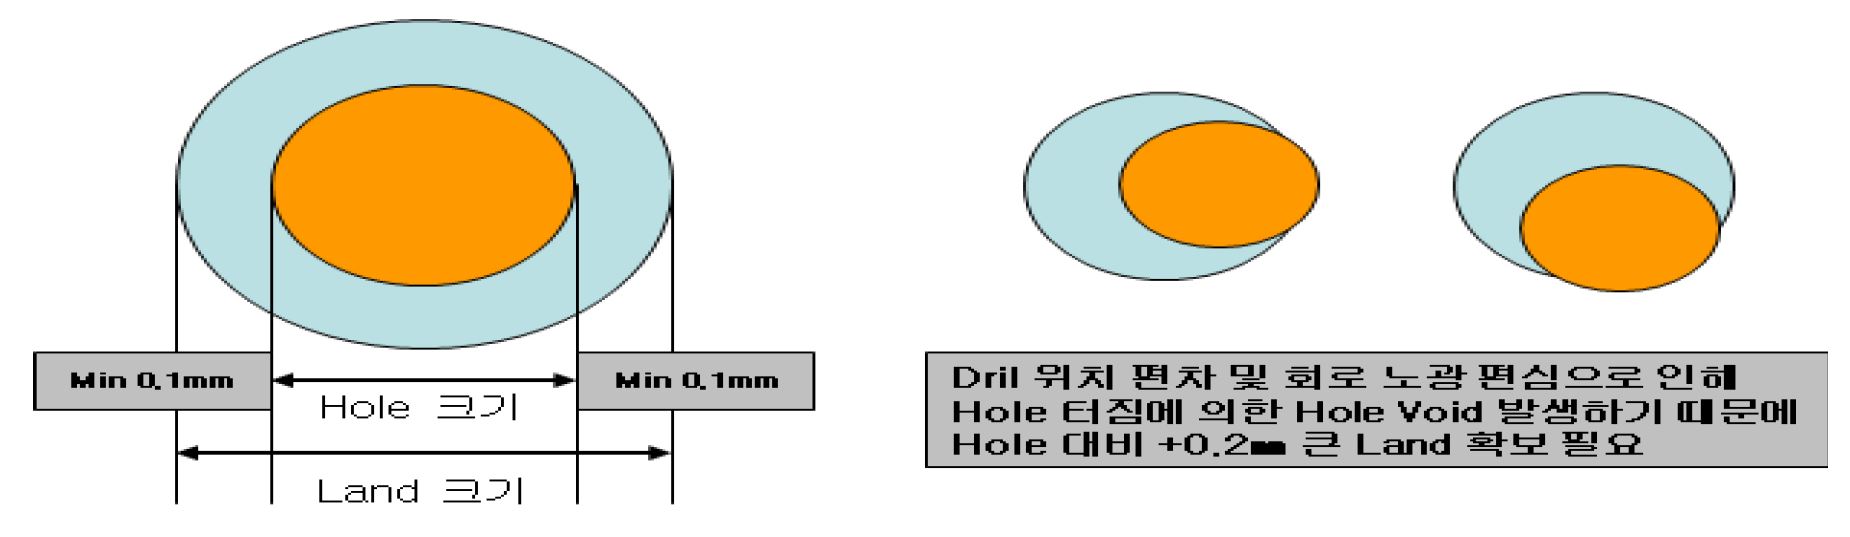 Hole 크기와 Land 크기의 상관 관계